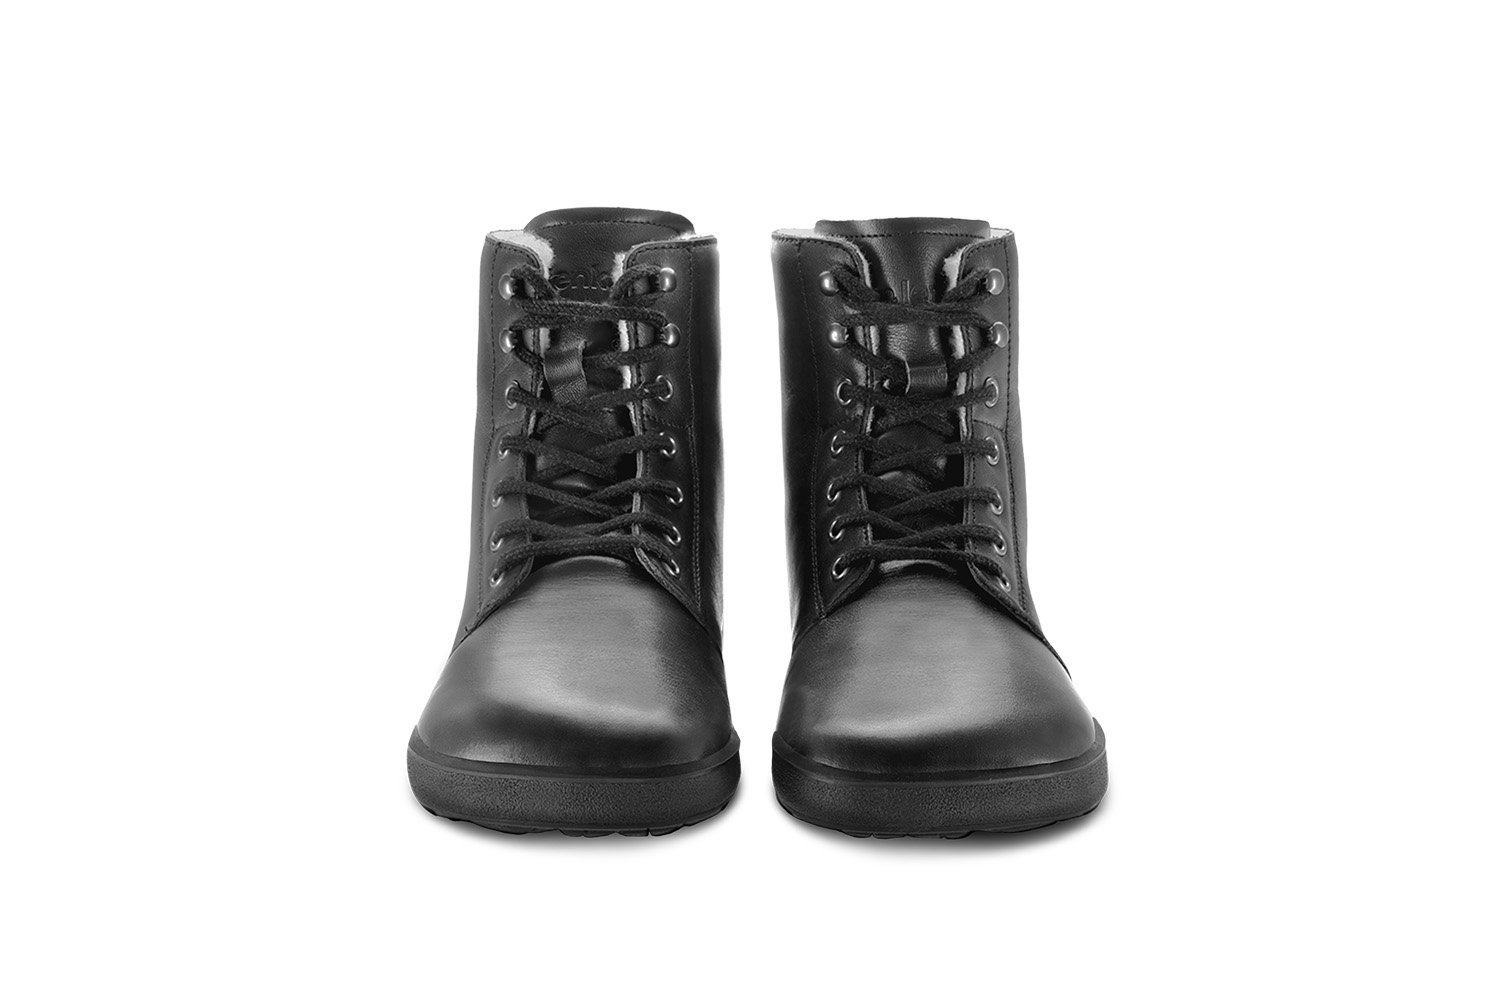 Barefoot Combat Boots - The 9 Best Zero Drop Lace-Up Boots